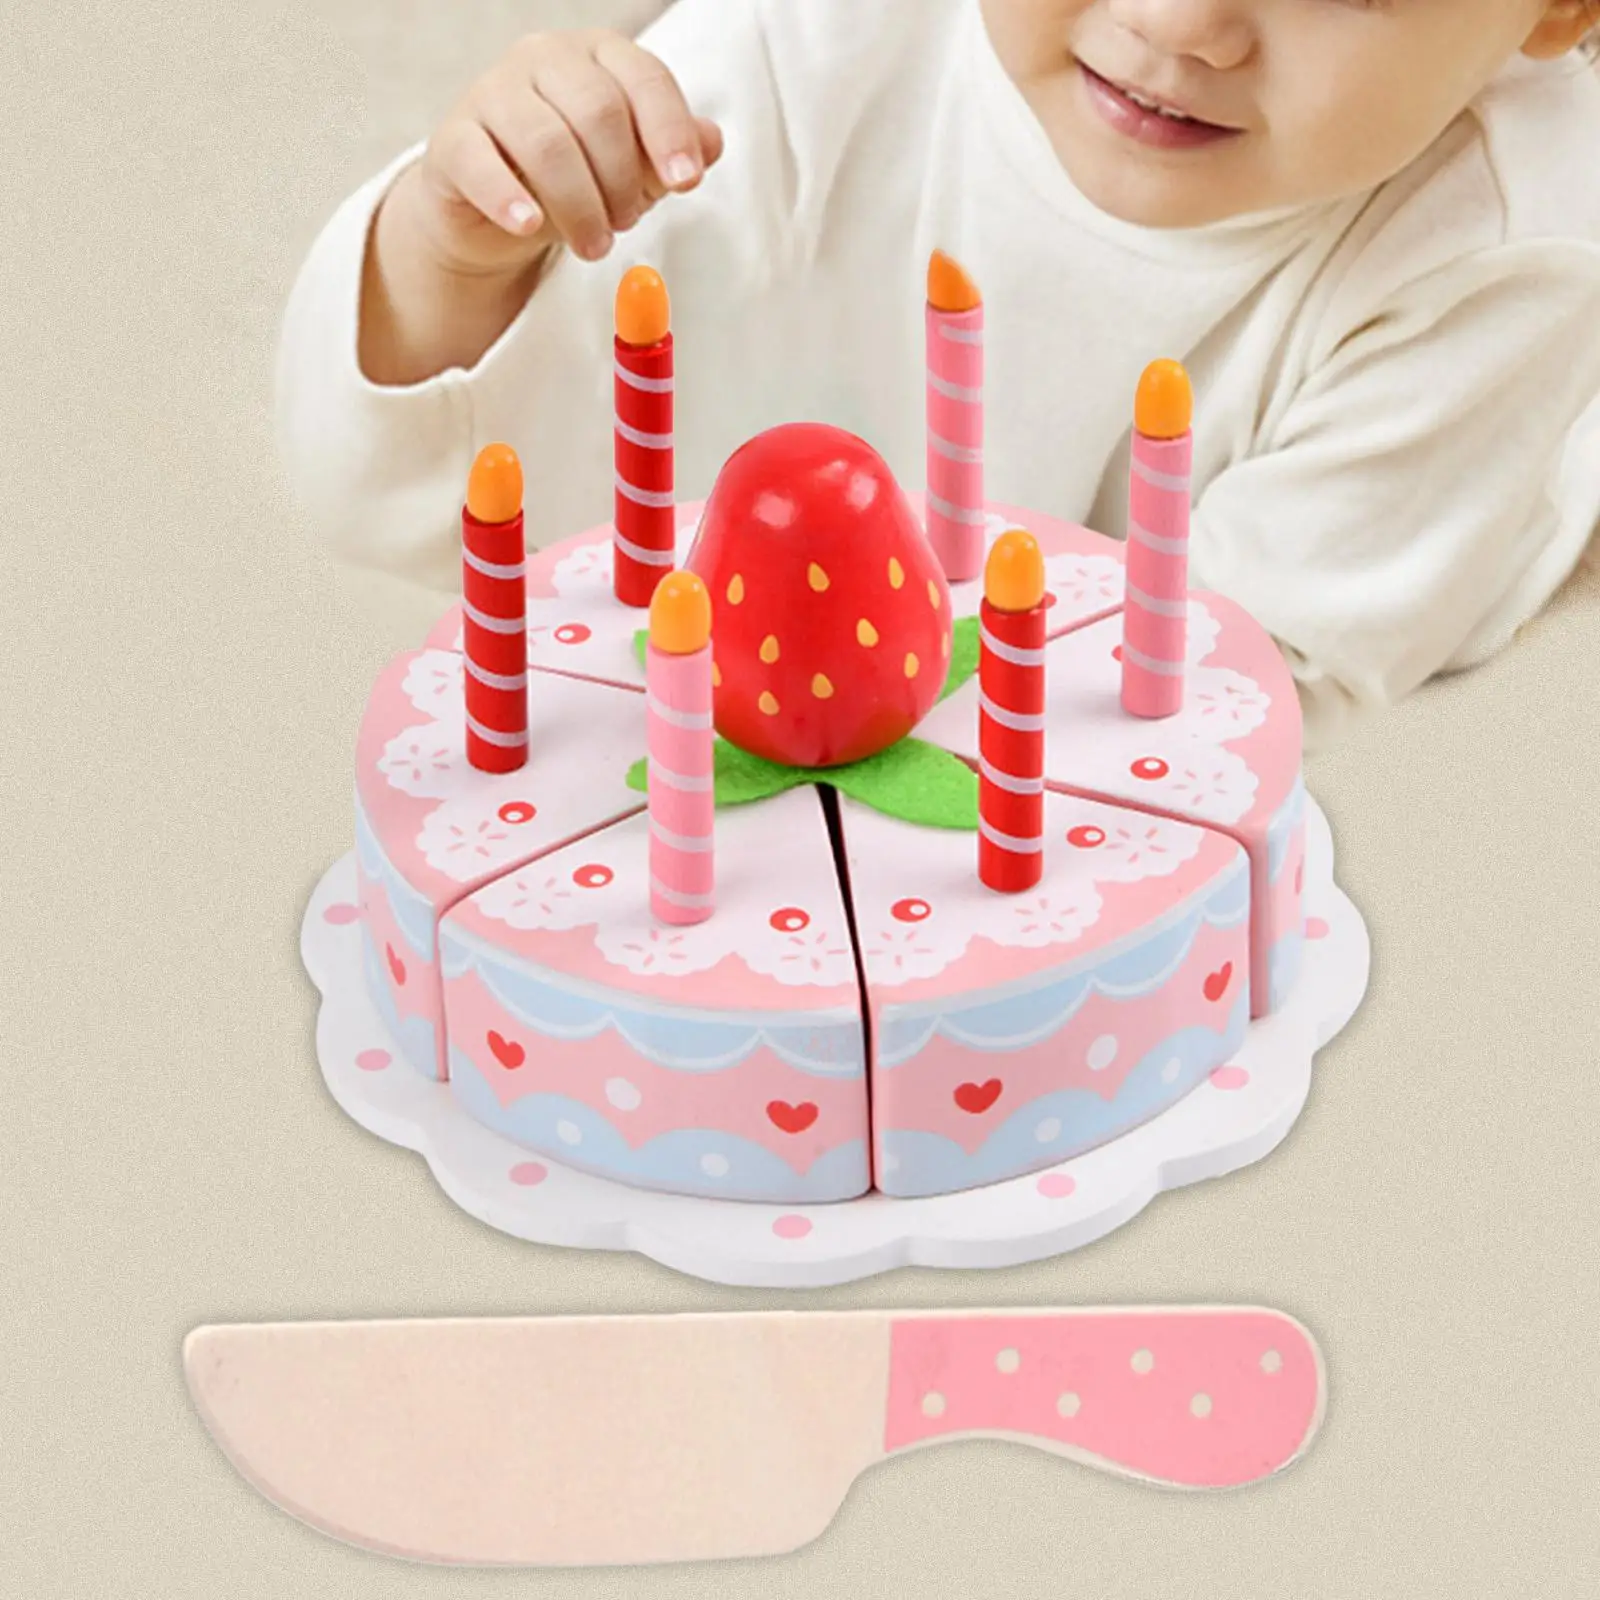 Wooden Birthday Cake Toy Early Educational Toys Strawberry Birthday Cake for Children 3 4 5 6 Boys Girls Kids Holiday Gift